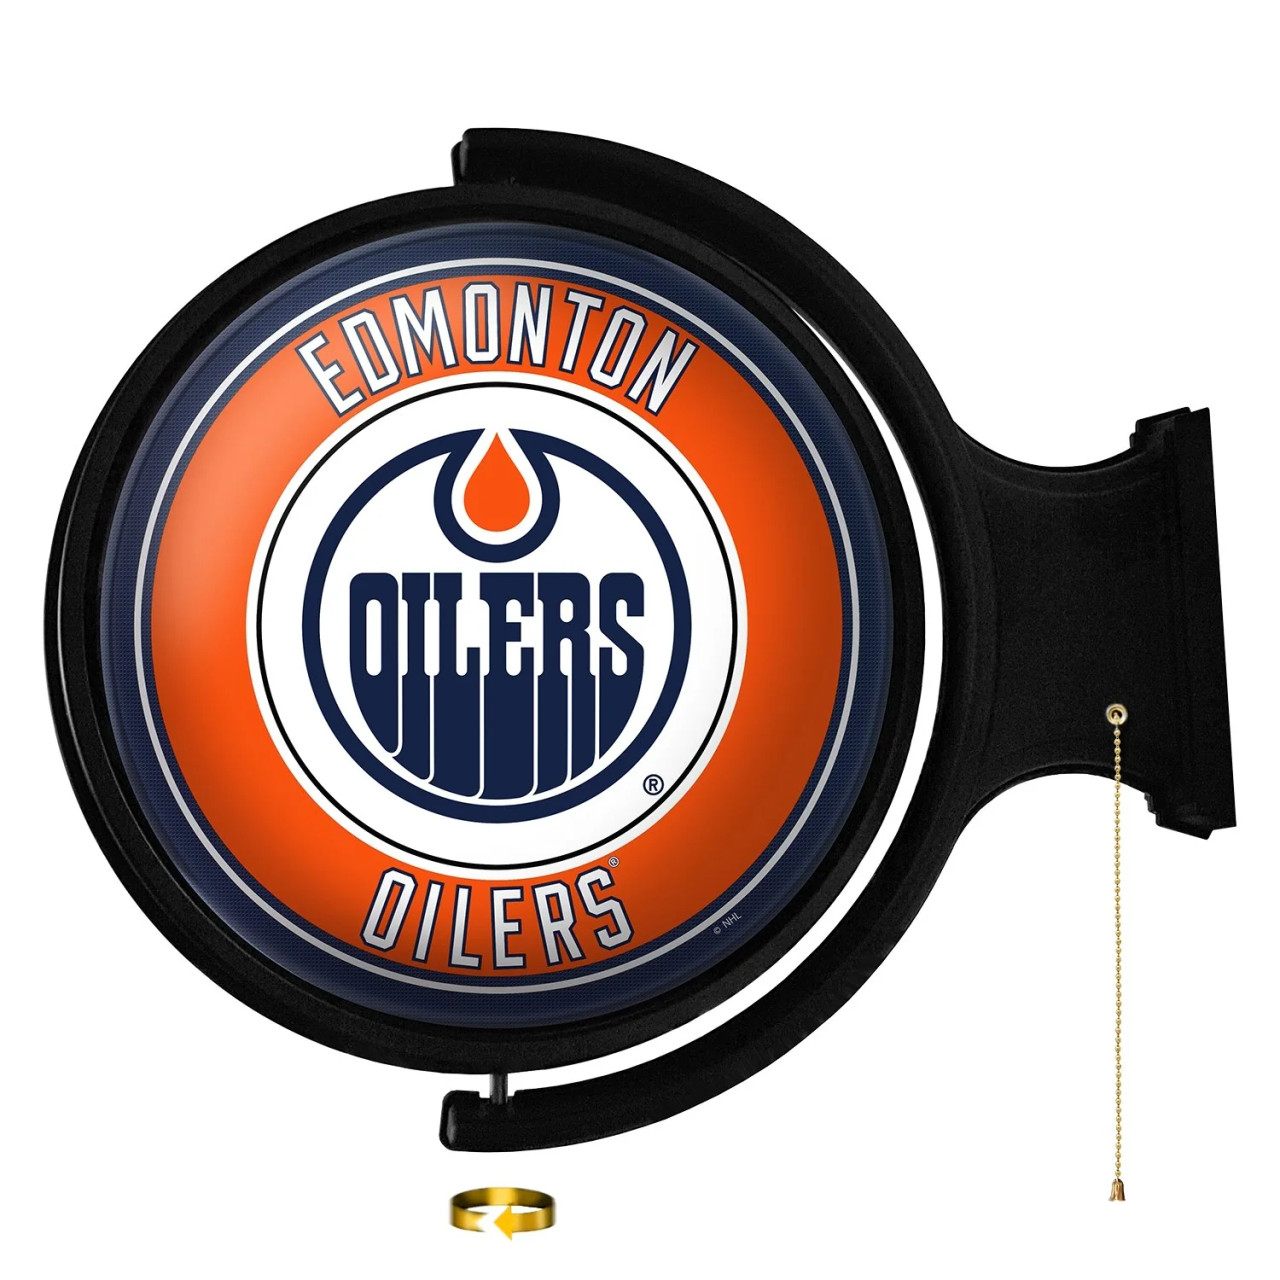 NHEDMO-115-01, EDM, Edmonton, Oilers, Original, Round, Rotating, Lighted, Wall, Sign, NHEDMO-115-01, NHL, The Fan-Brand, 686878992038